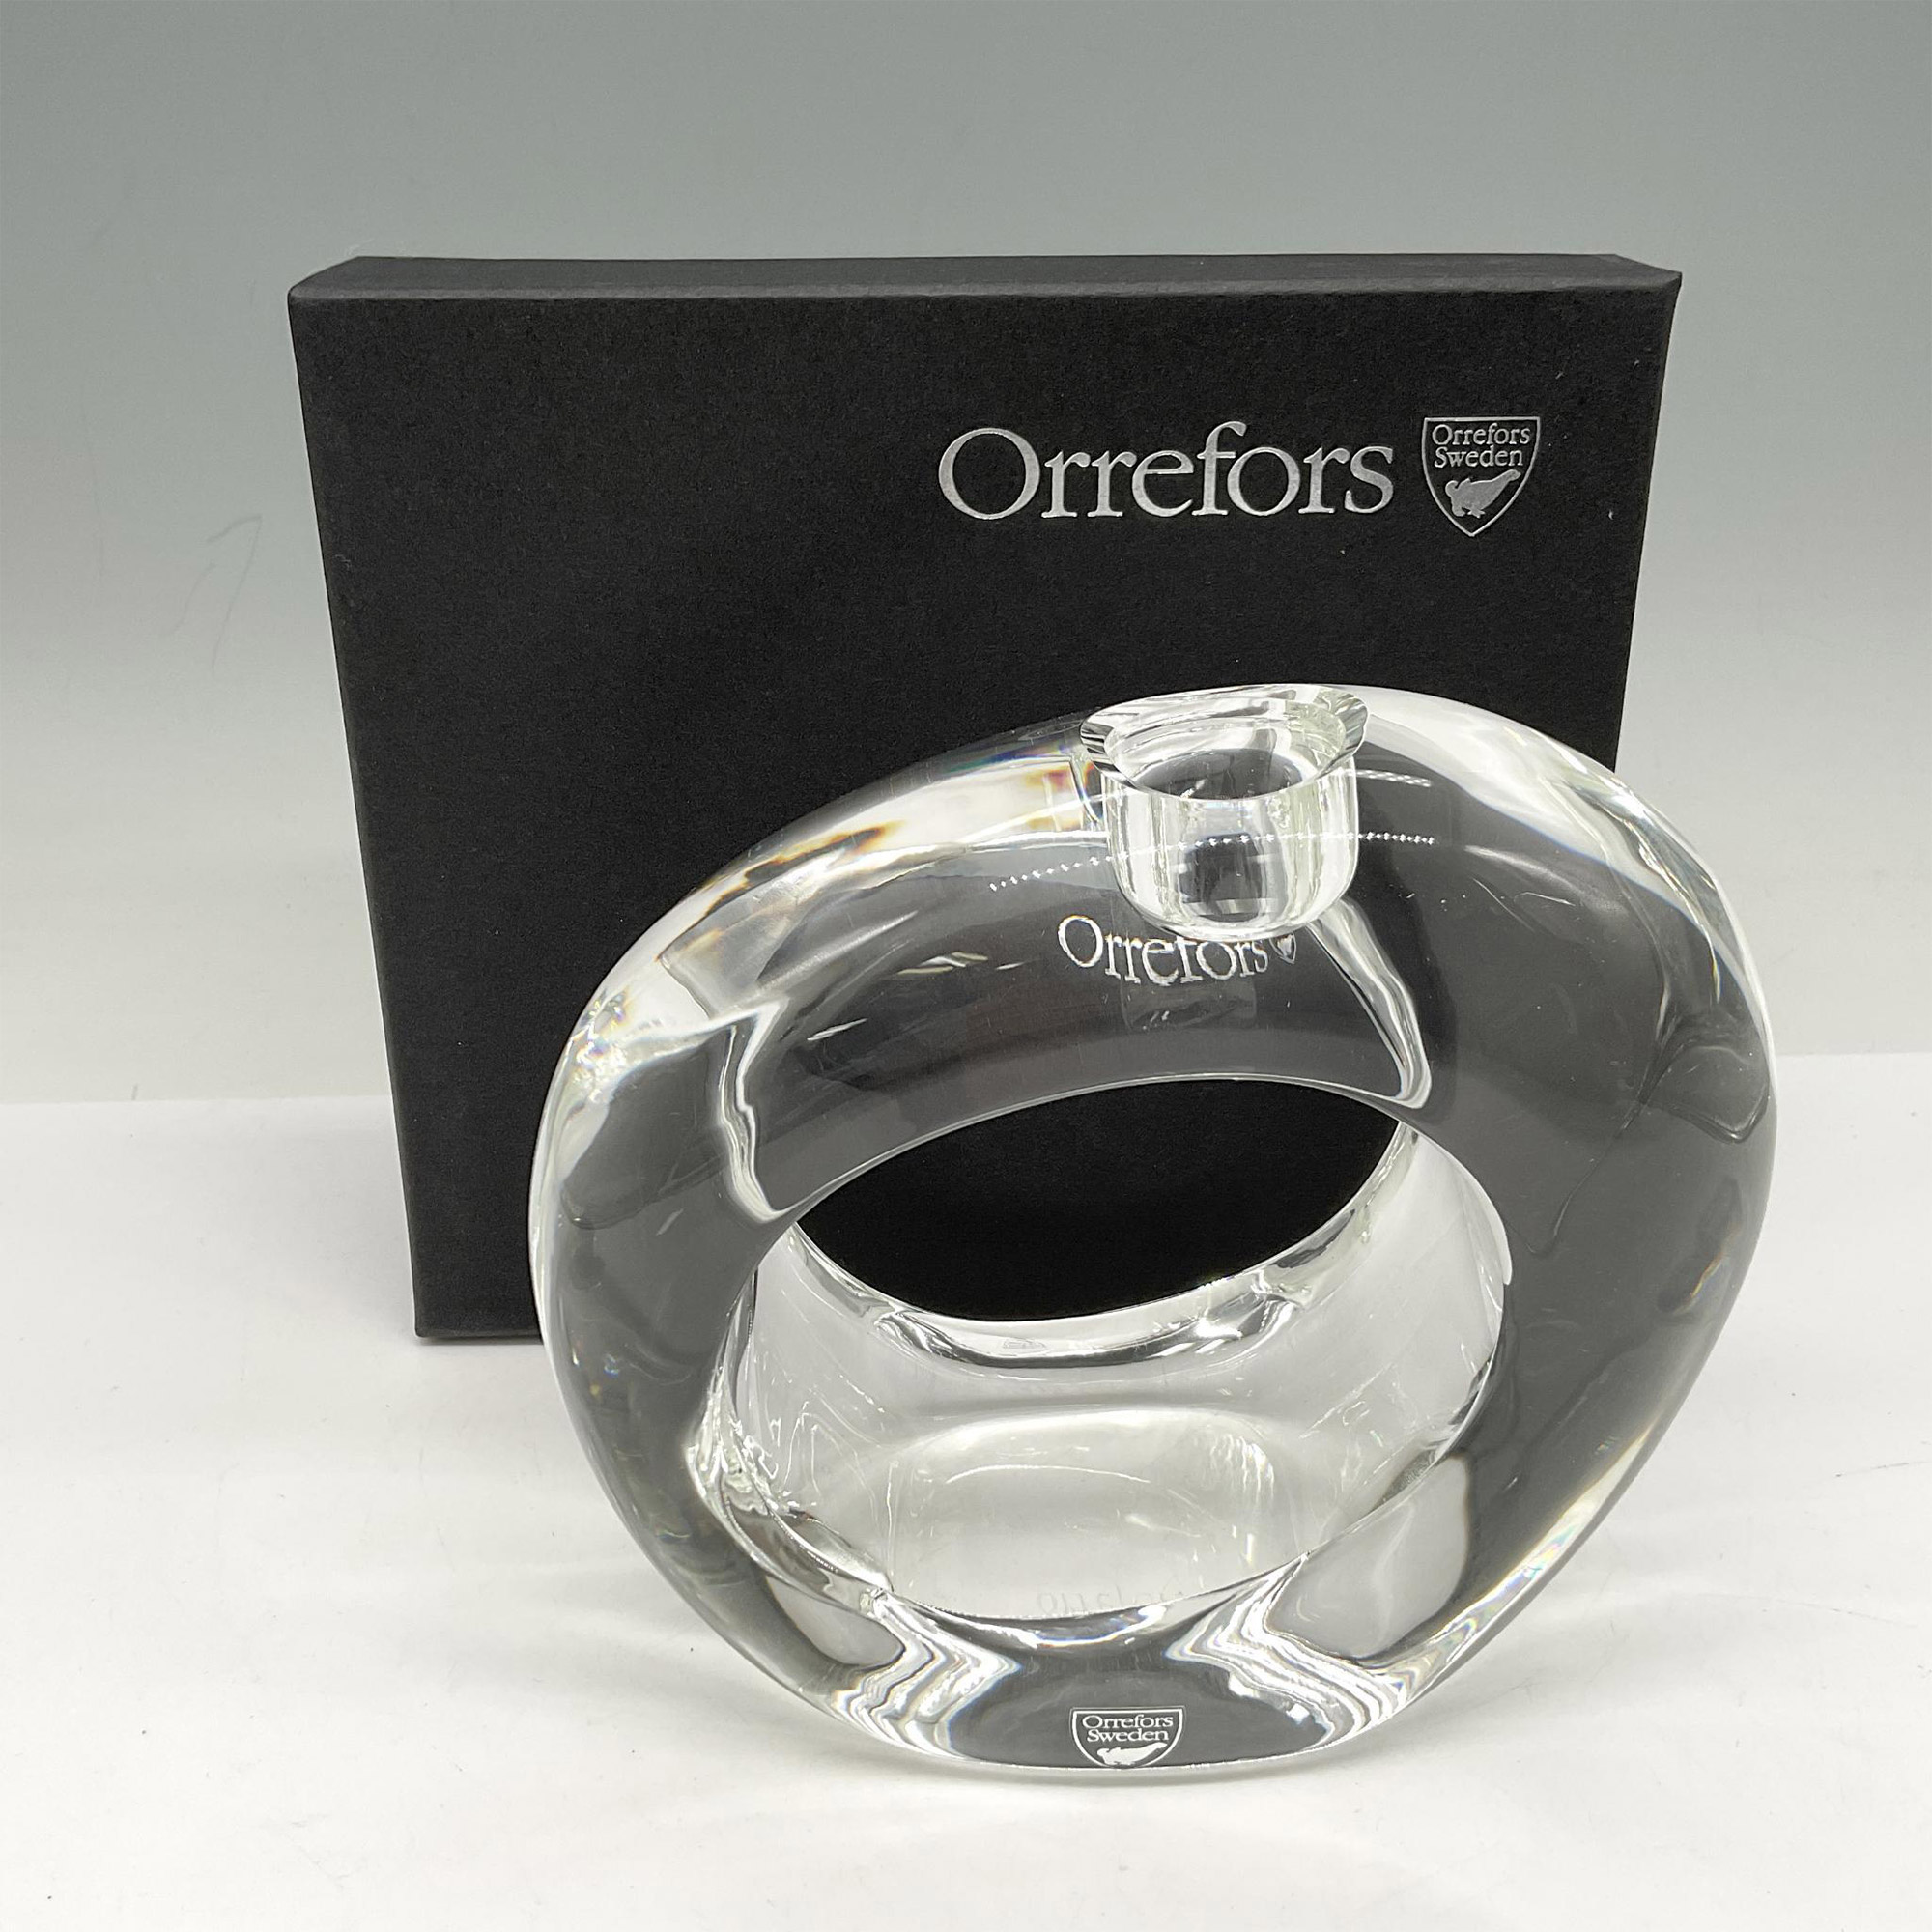 Orrefors Crystal Oval Candle Holder - Image 5 of 5